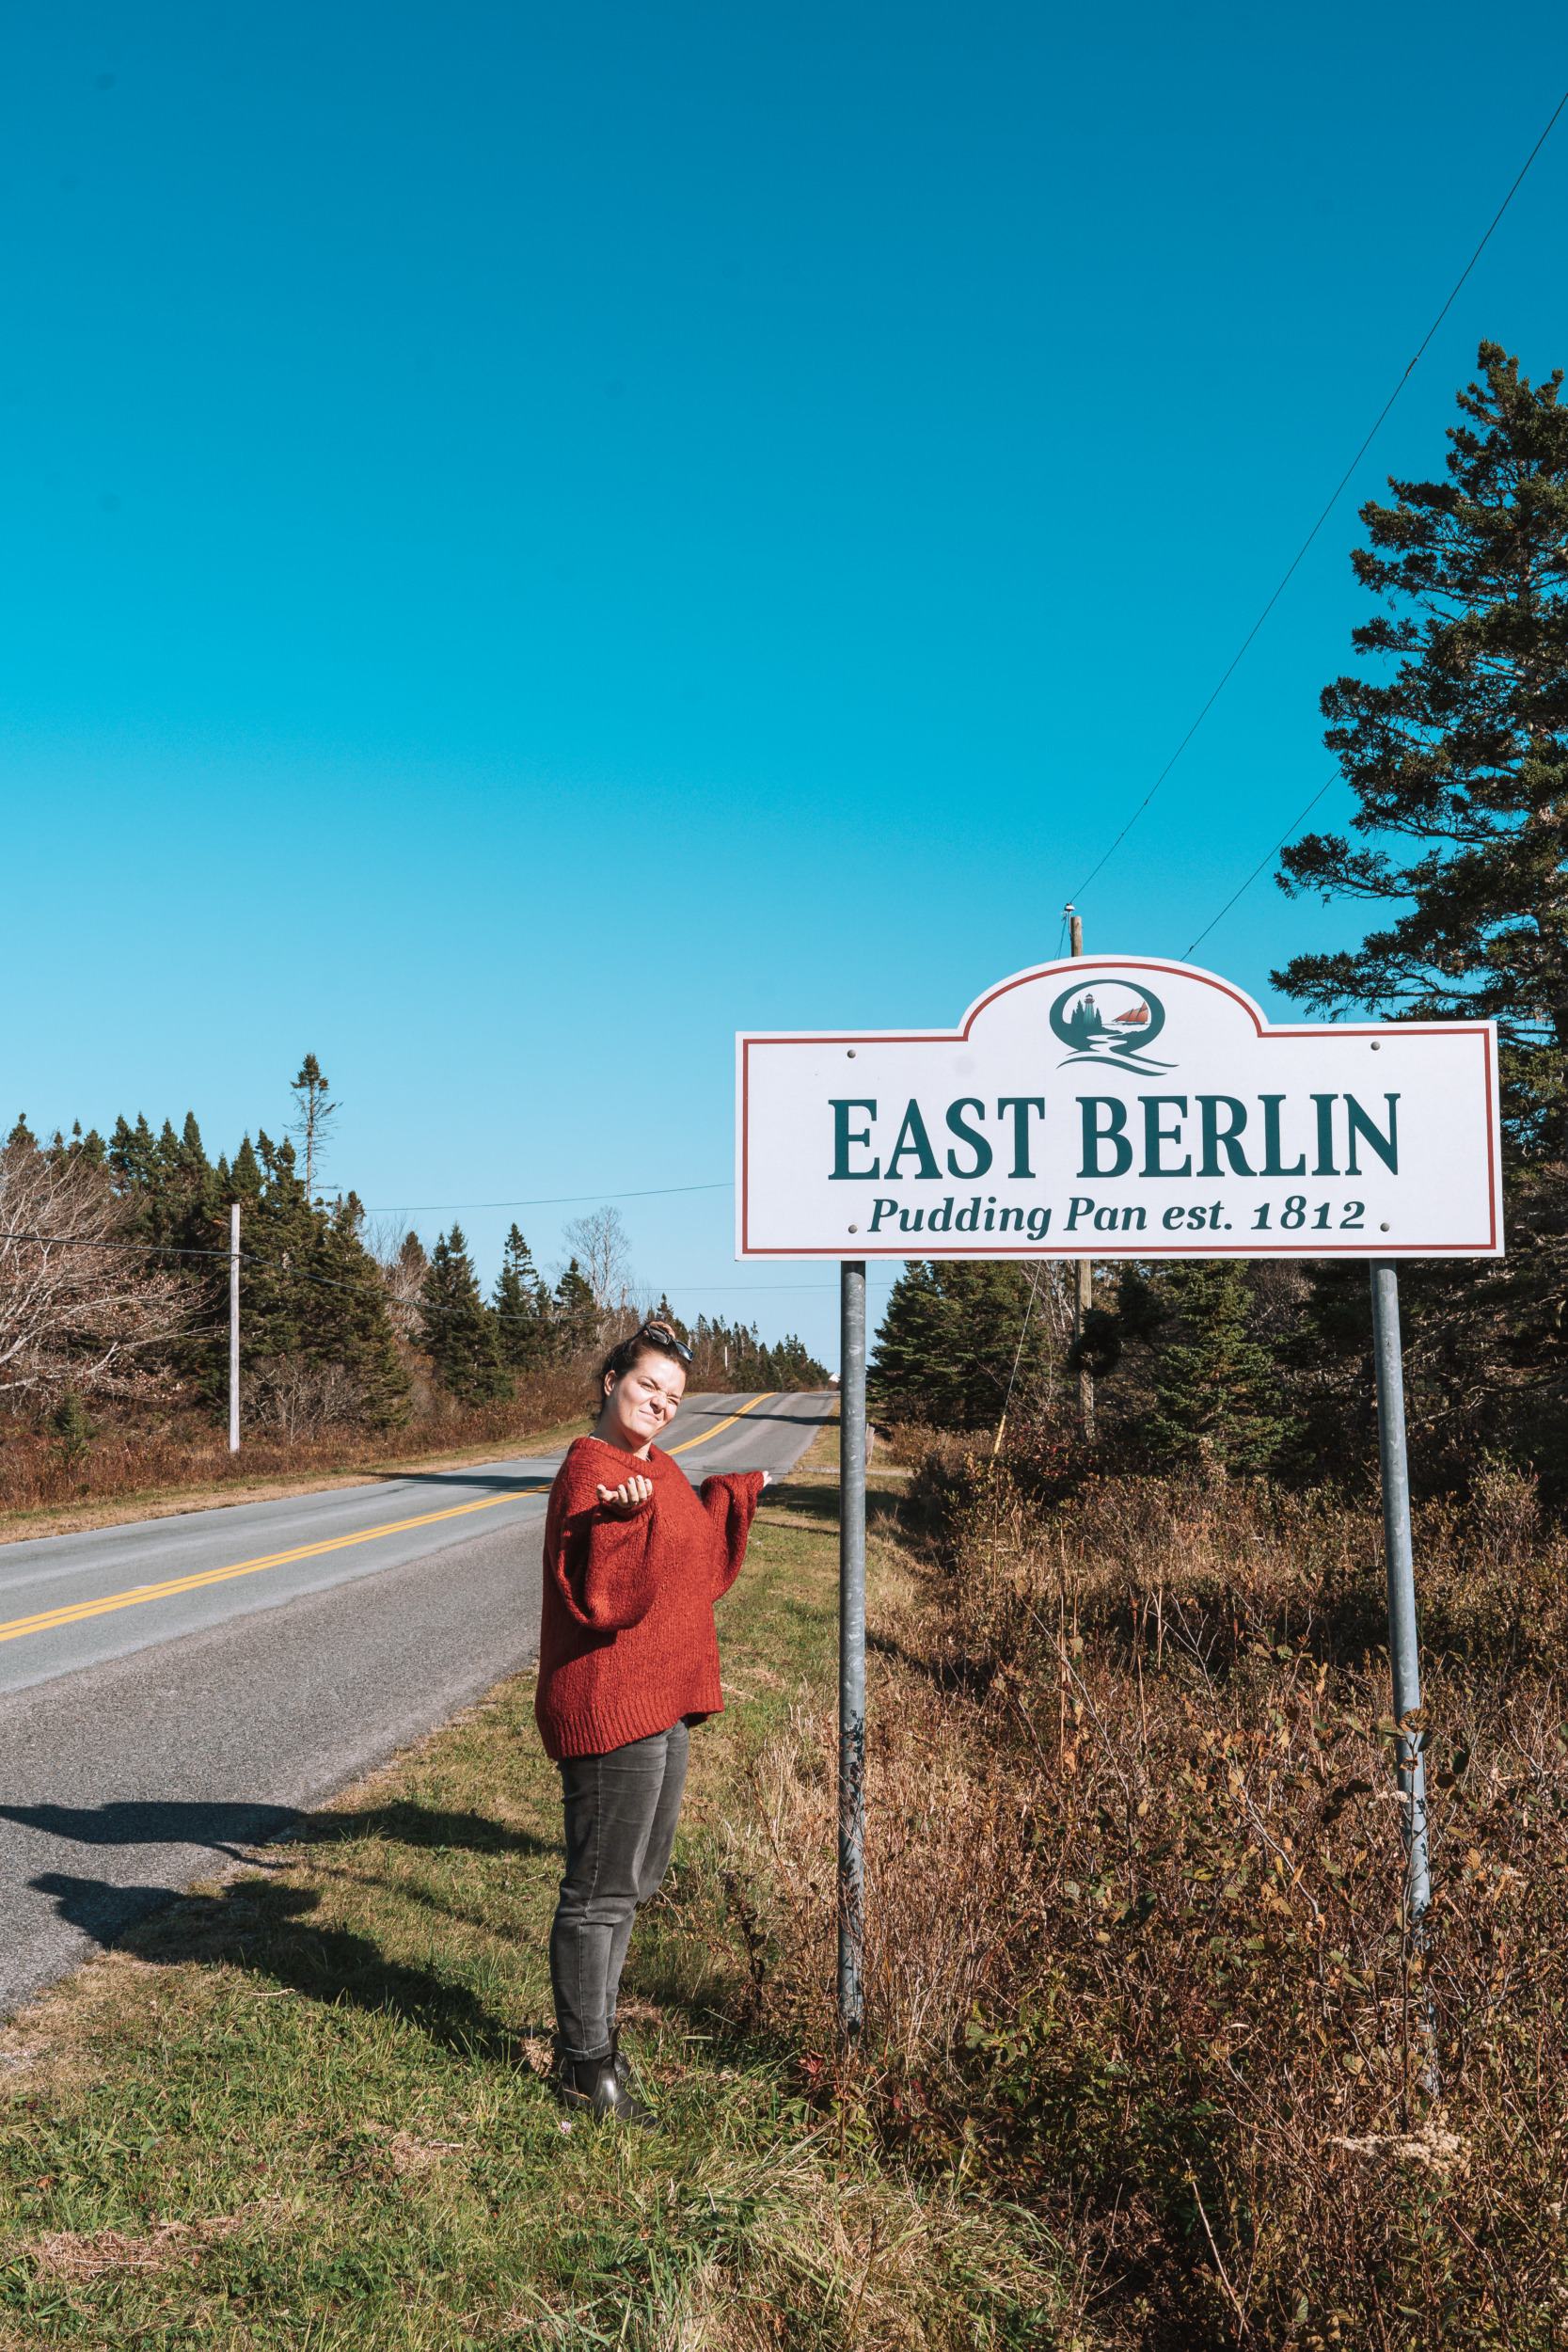 East Berlin in Nova Scotia